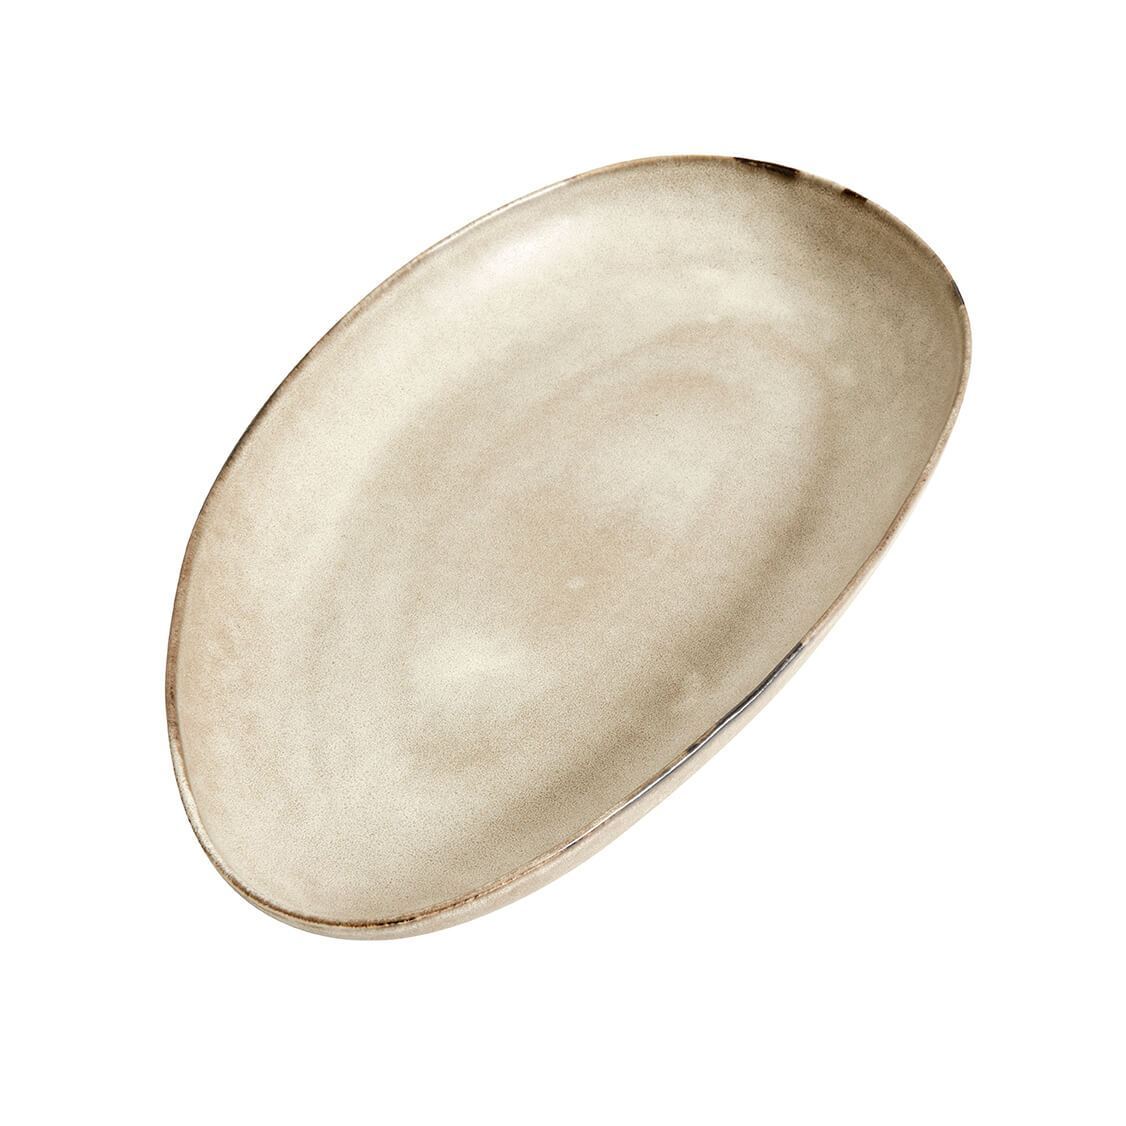 Muubs Mame serveer plaat ovale oester, 43 cm